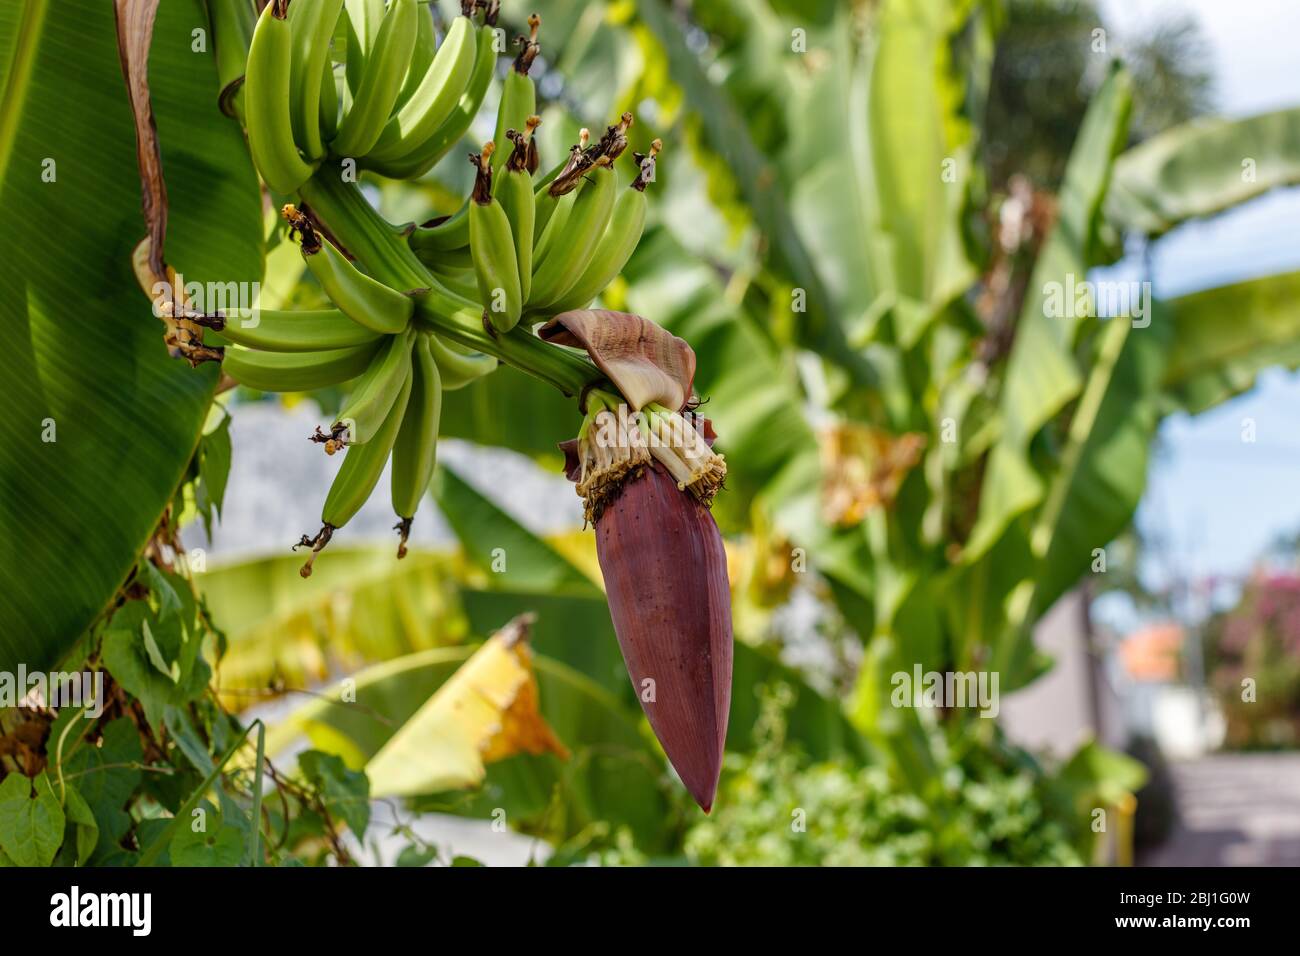 https://c8.alamy.com/comp/2BJ1G0W/ripe-green-banana-bunch-on-the-tree-and-banana-inflorescence-flower-bali-indonesia-2BJ1G0W.jpg